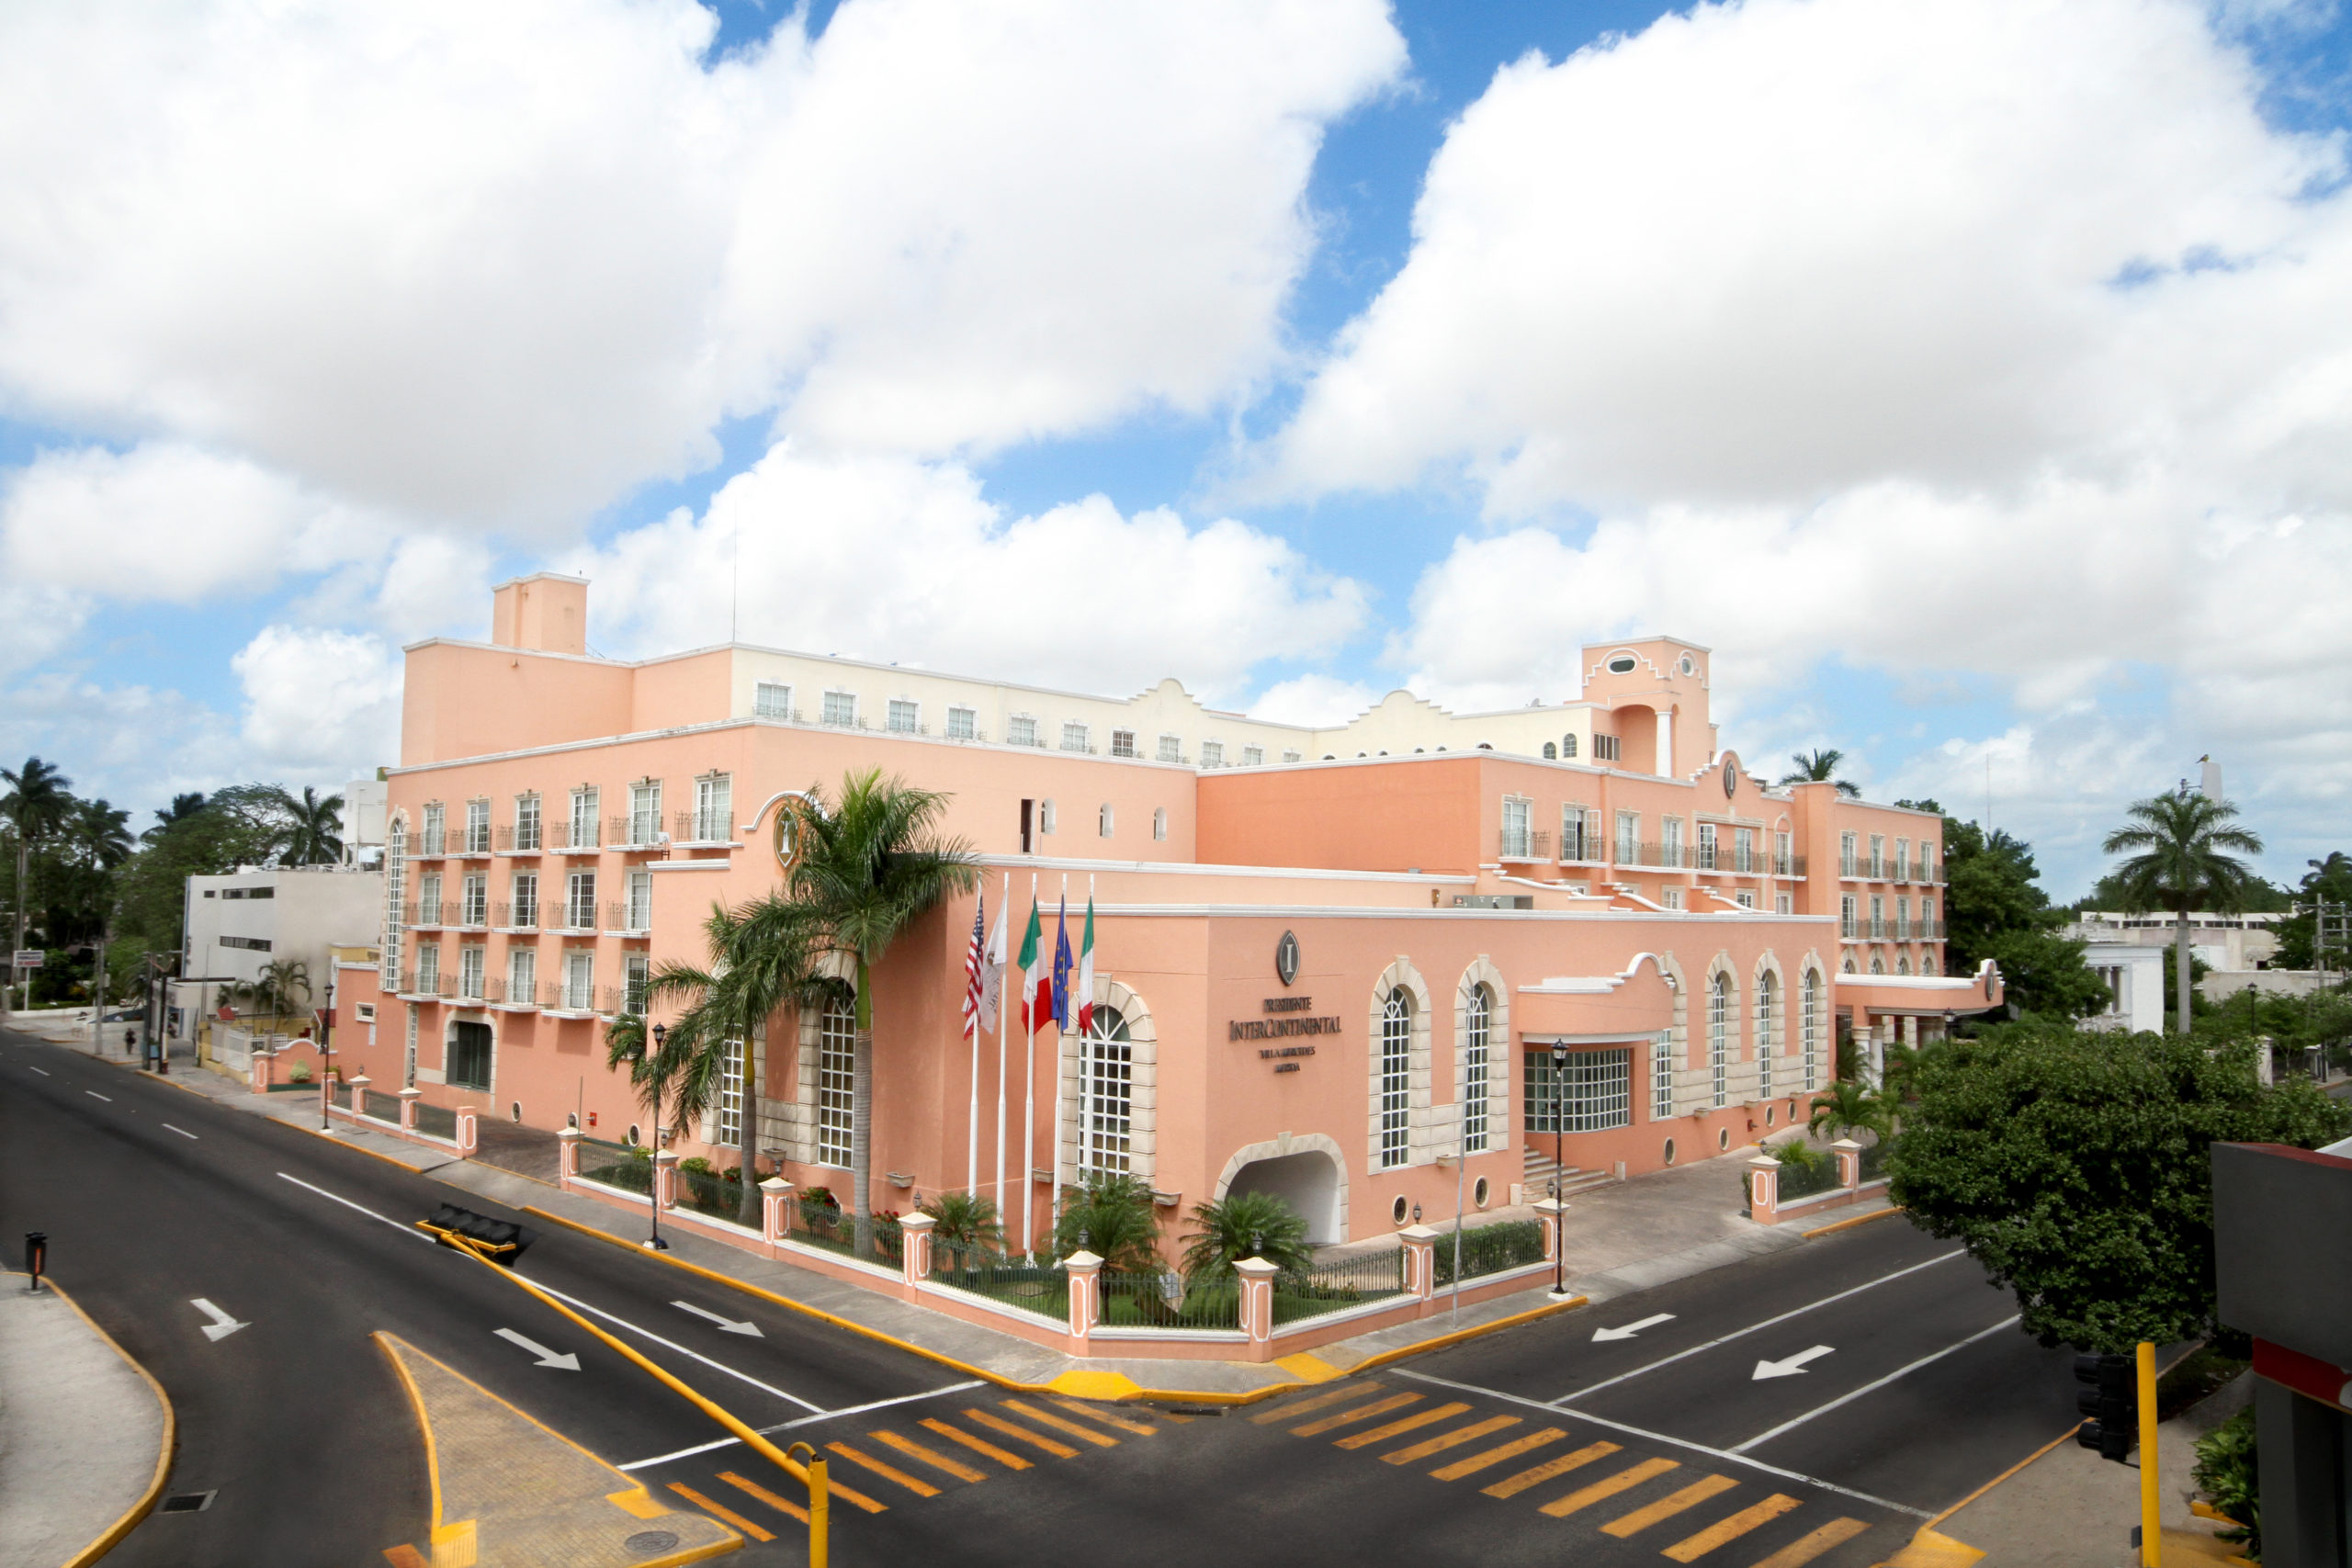 Villa Mercedes Mérida entra a la cadena Hilton | México Desconocido